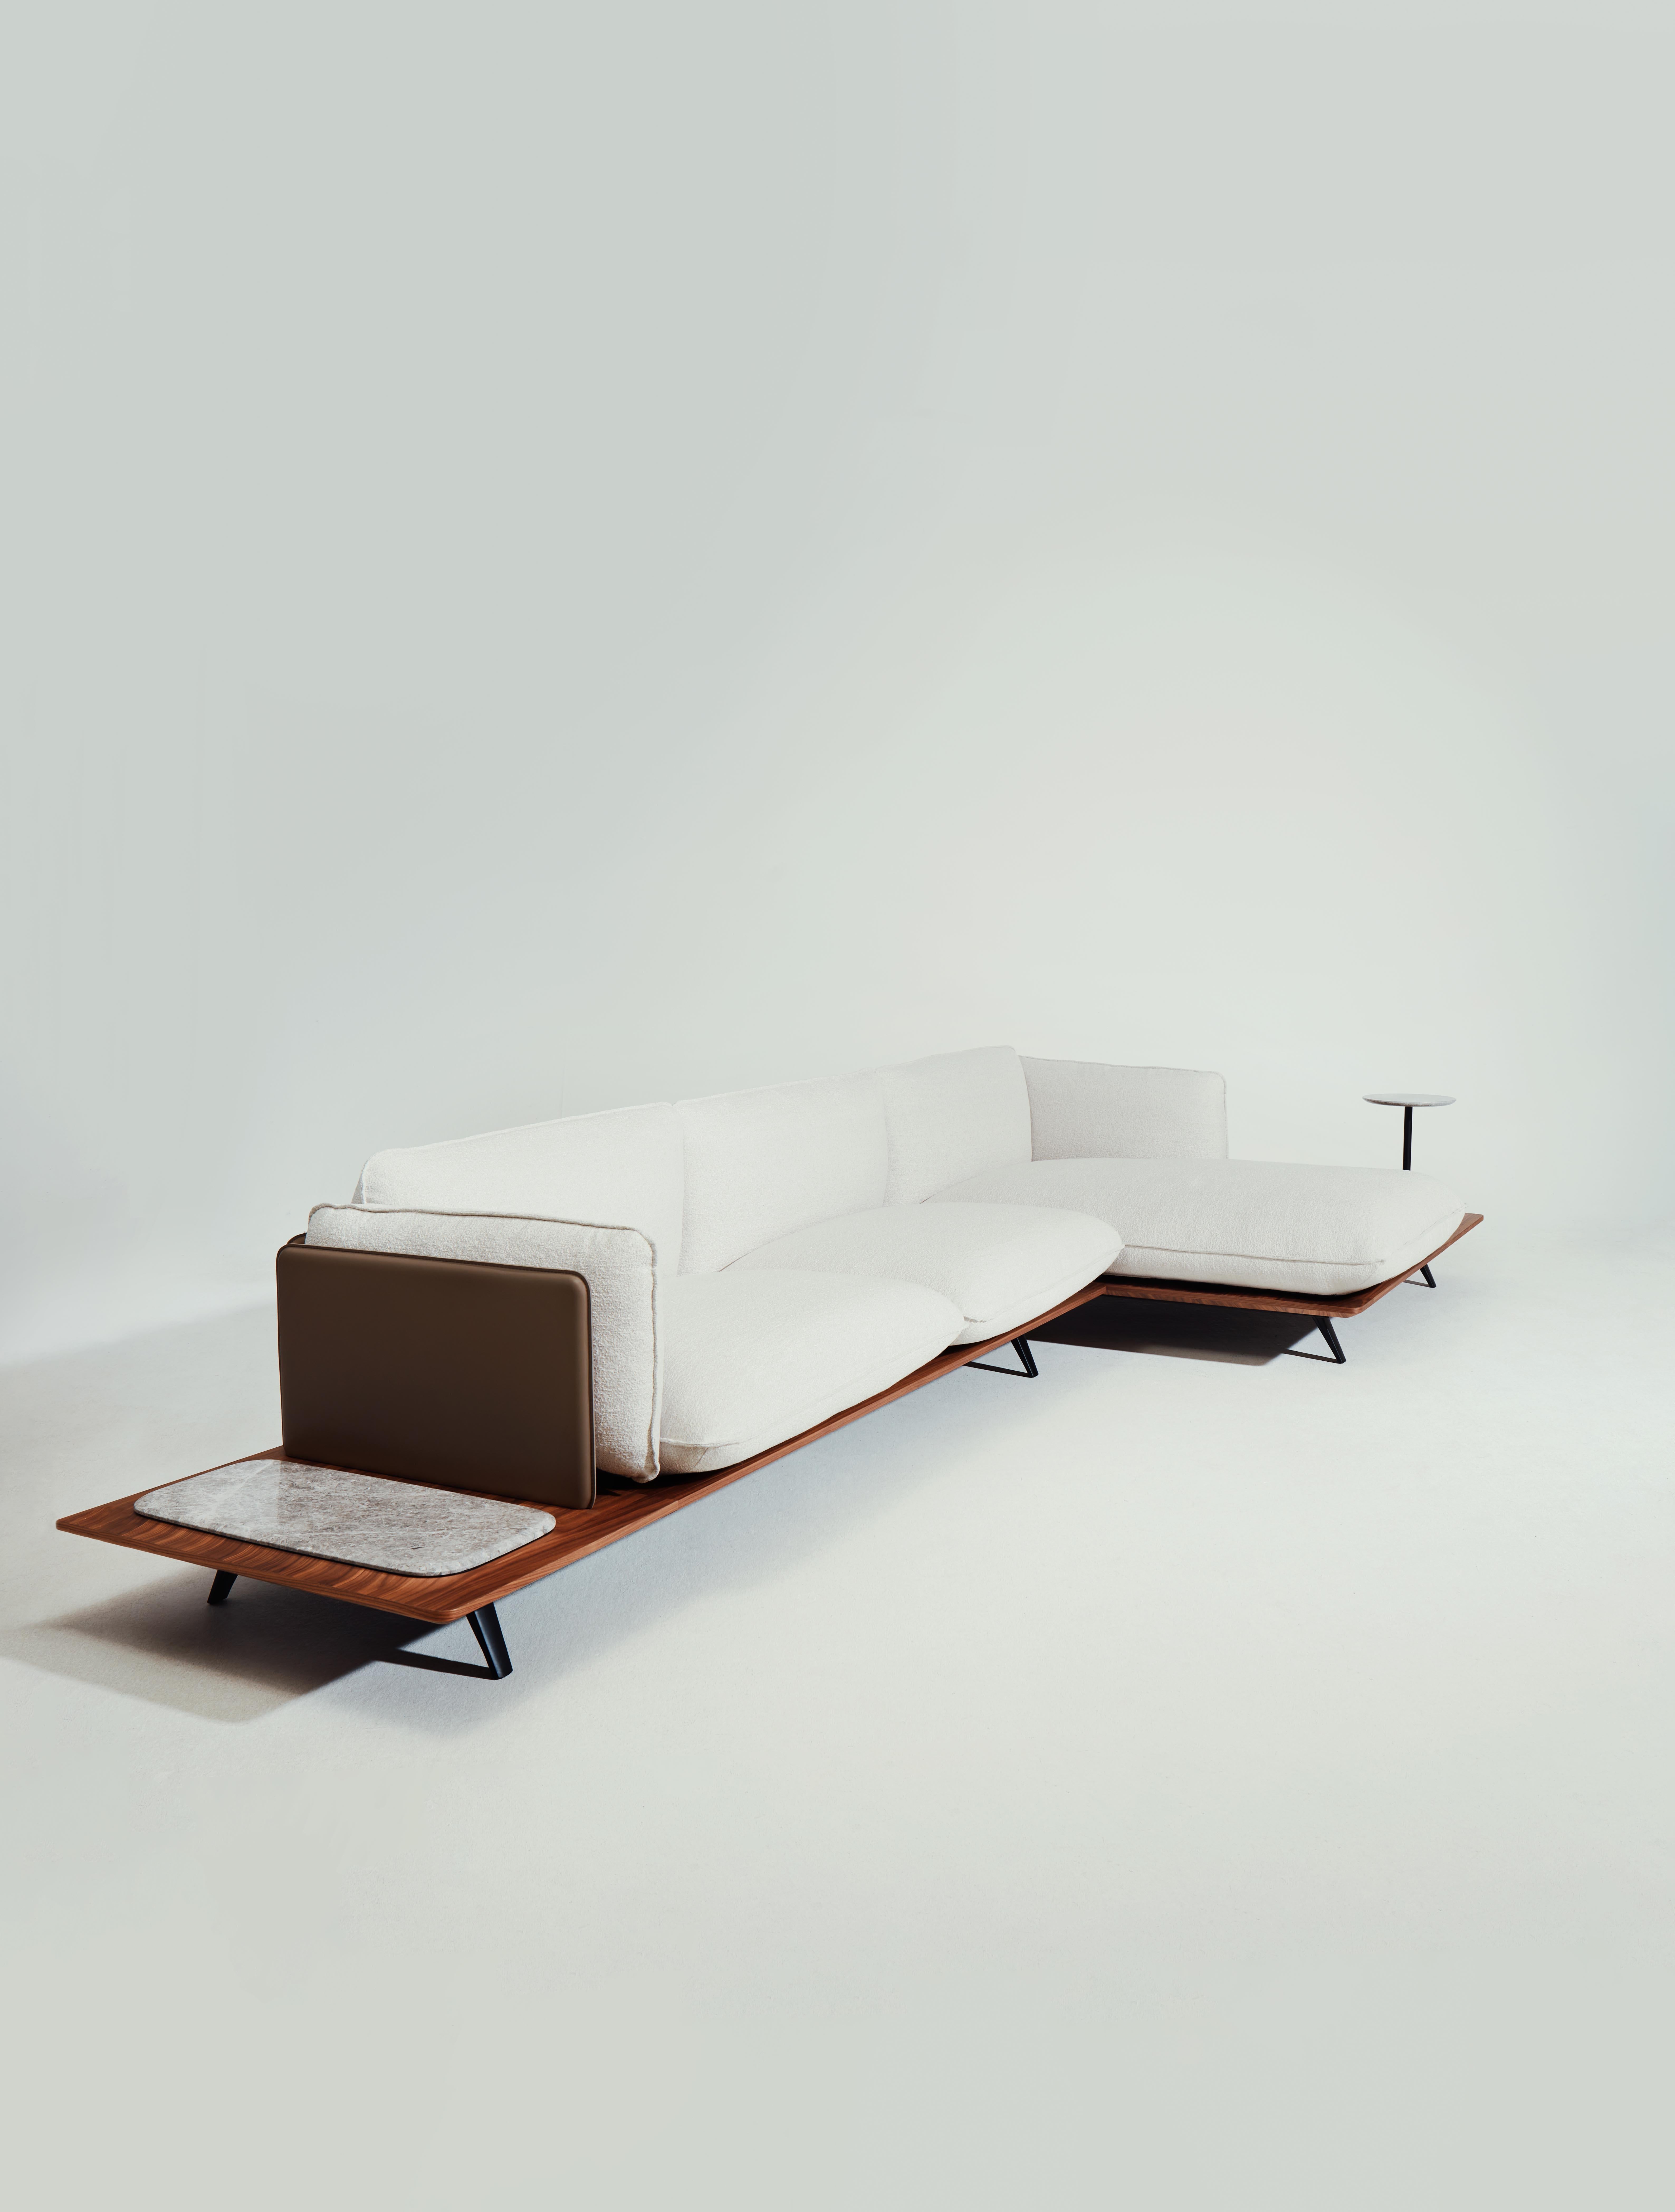 Sahara sofa by Noé Duchaufour Lawrance
Sofa 3 seats + 2 tops
Dimensions: W 416.3 x D 158.5 x H 83.8 cm
Materials: Leather or fabric, black aluminium powder, coat structure, wood base, leather back panels.

The design of the ‘Sahara’ sofa evokes